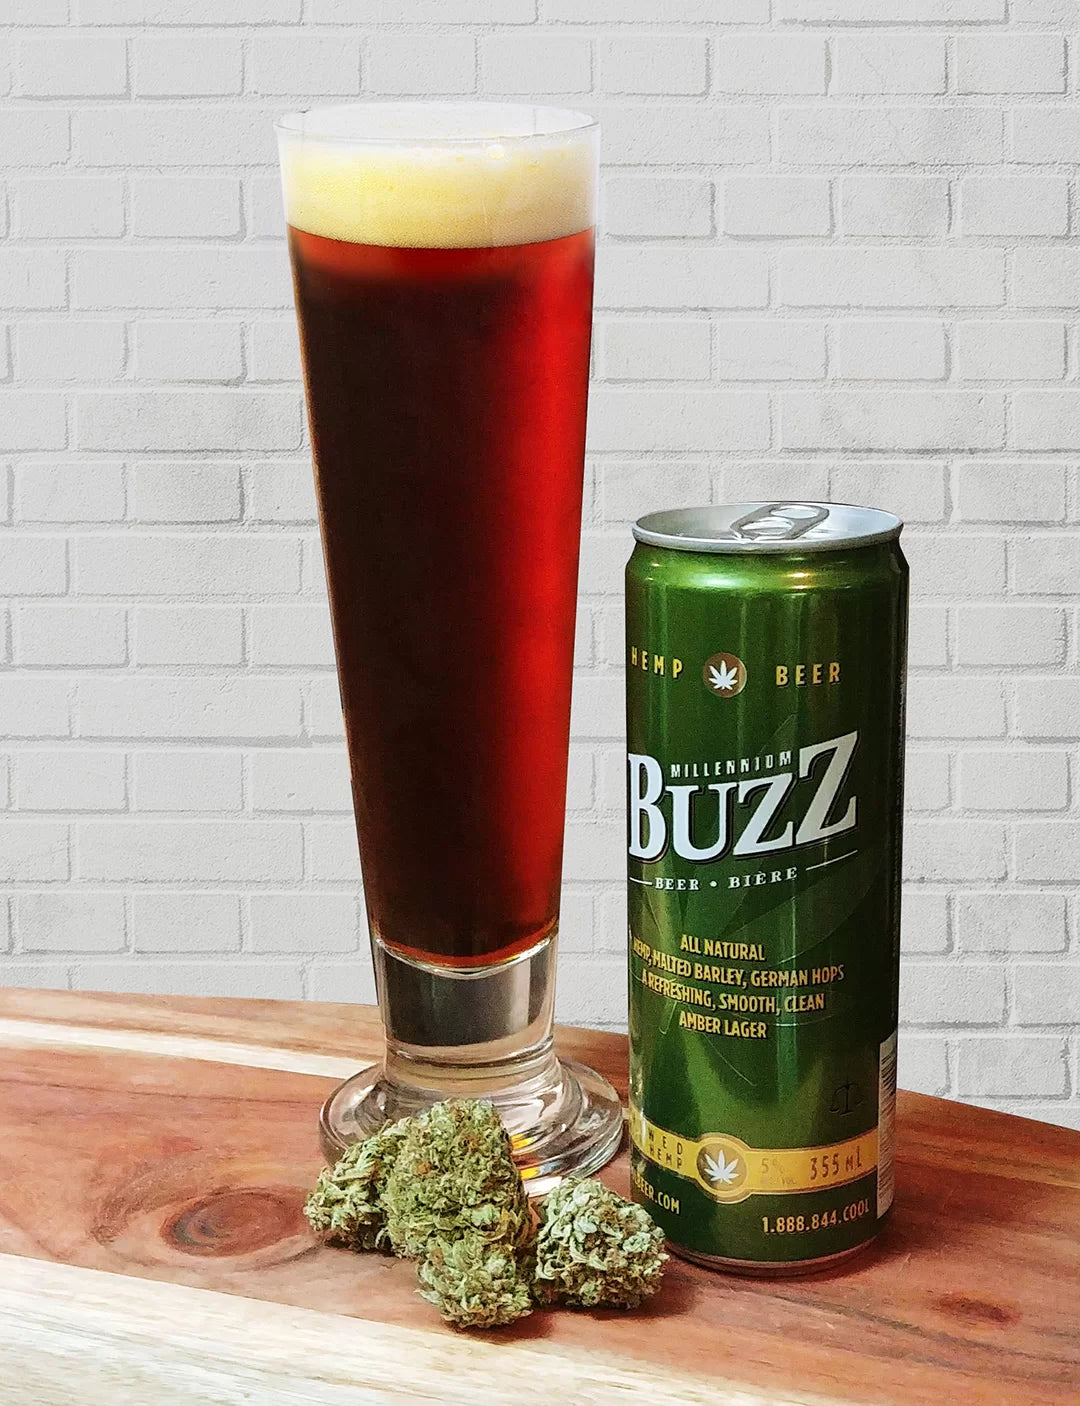 Hemp flower in front of a glass of Buzz hemp beer